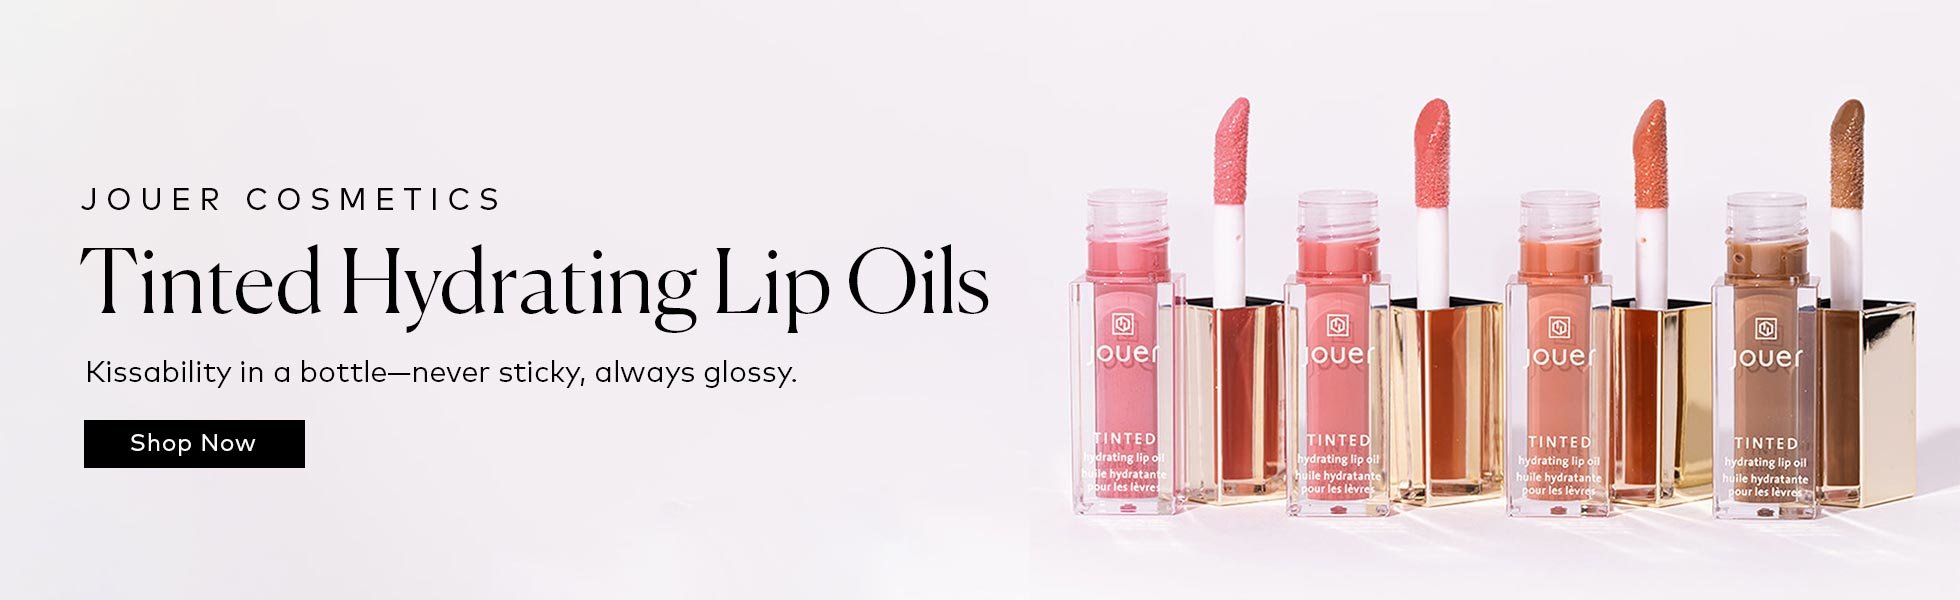 Shop the Jouer Cosmetics Tinted Hydrating Lip Oil on Beautylish.com! 